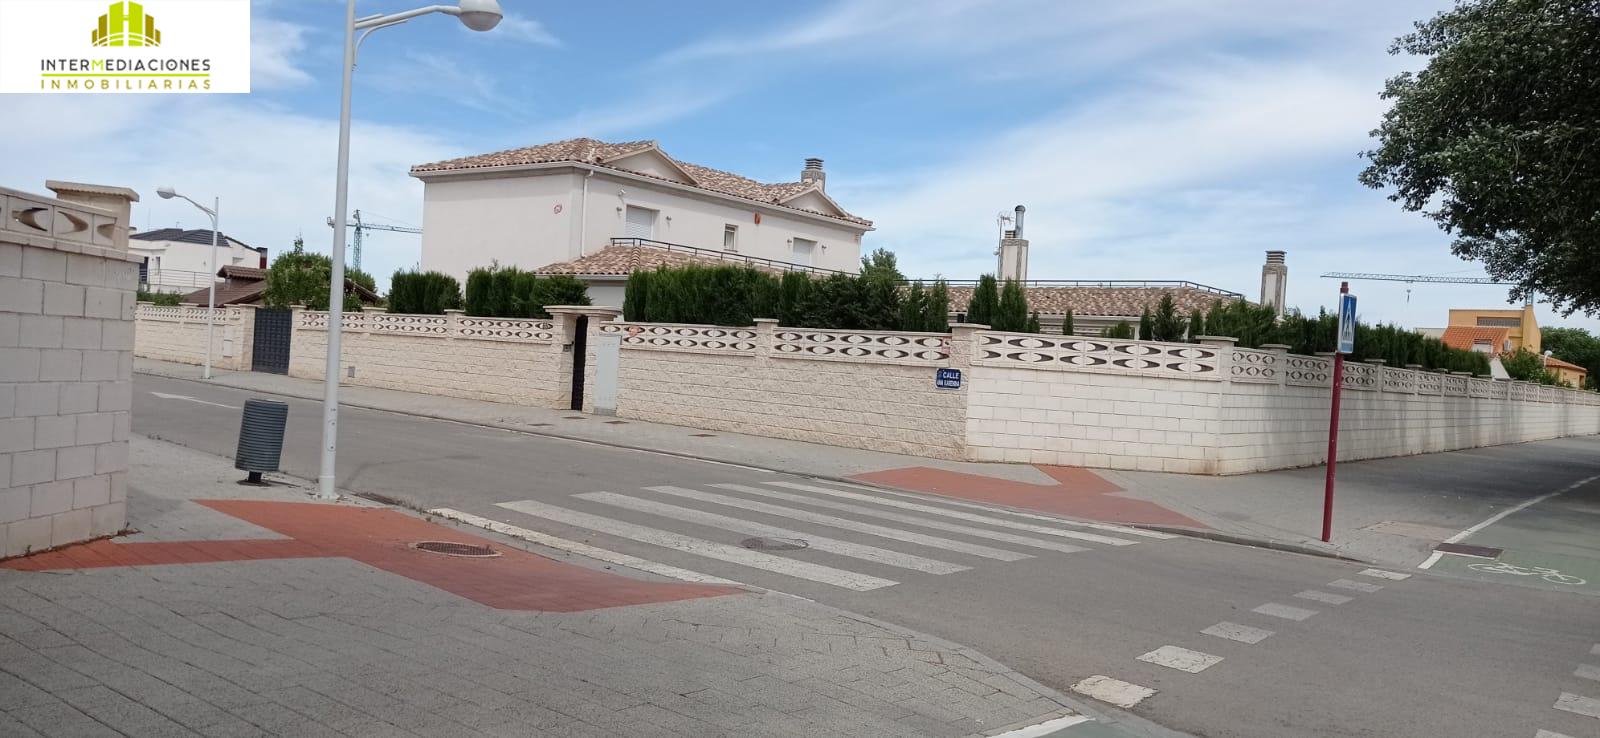 Venta de chalet en Albacete